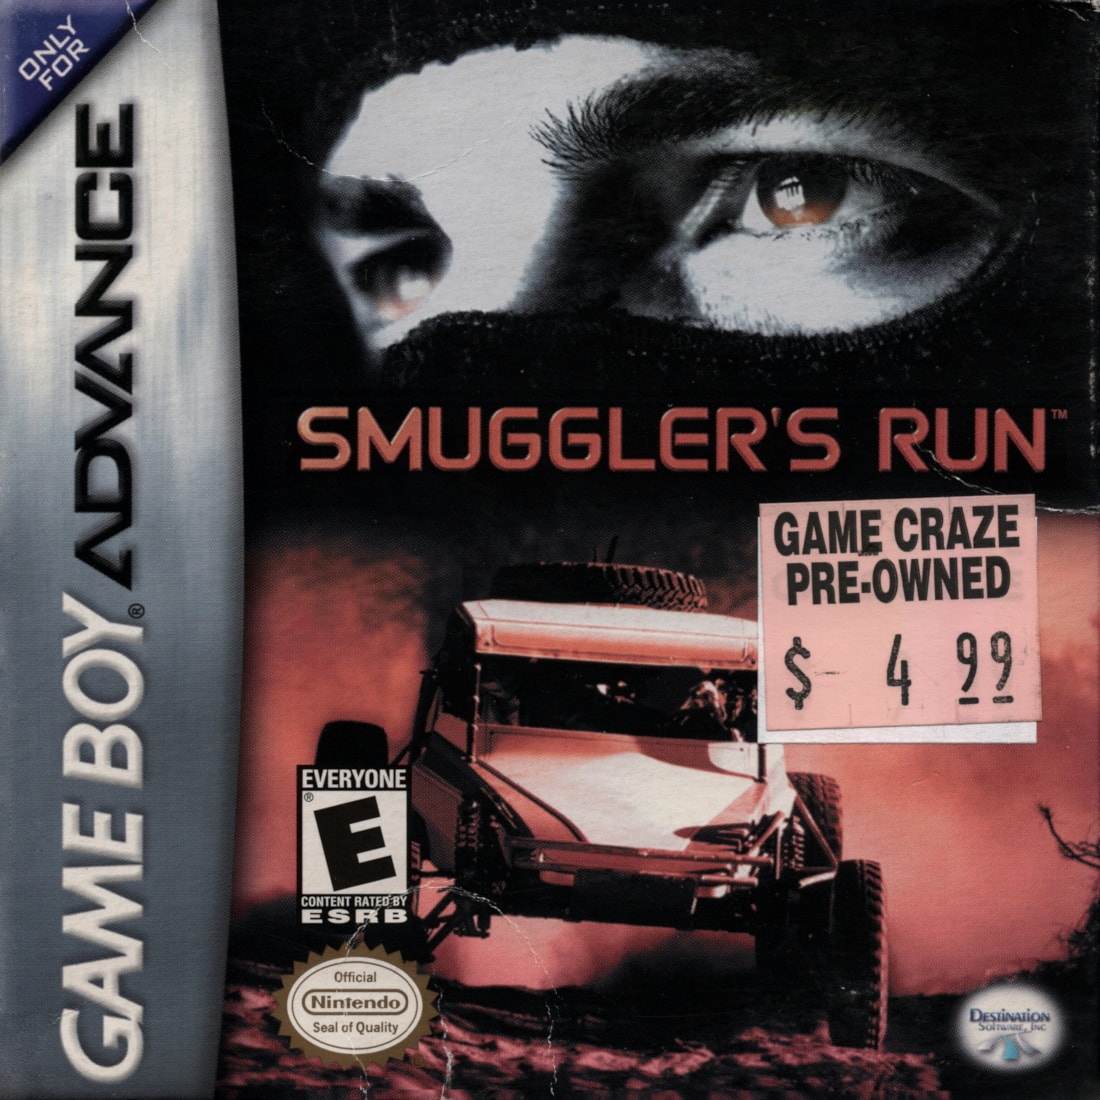 Smugglers Run cover